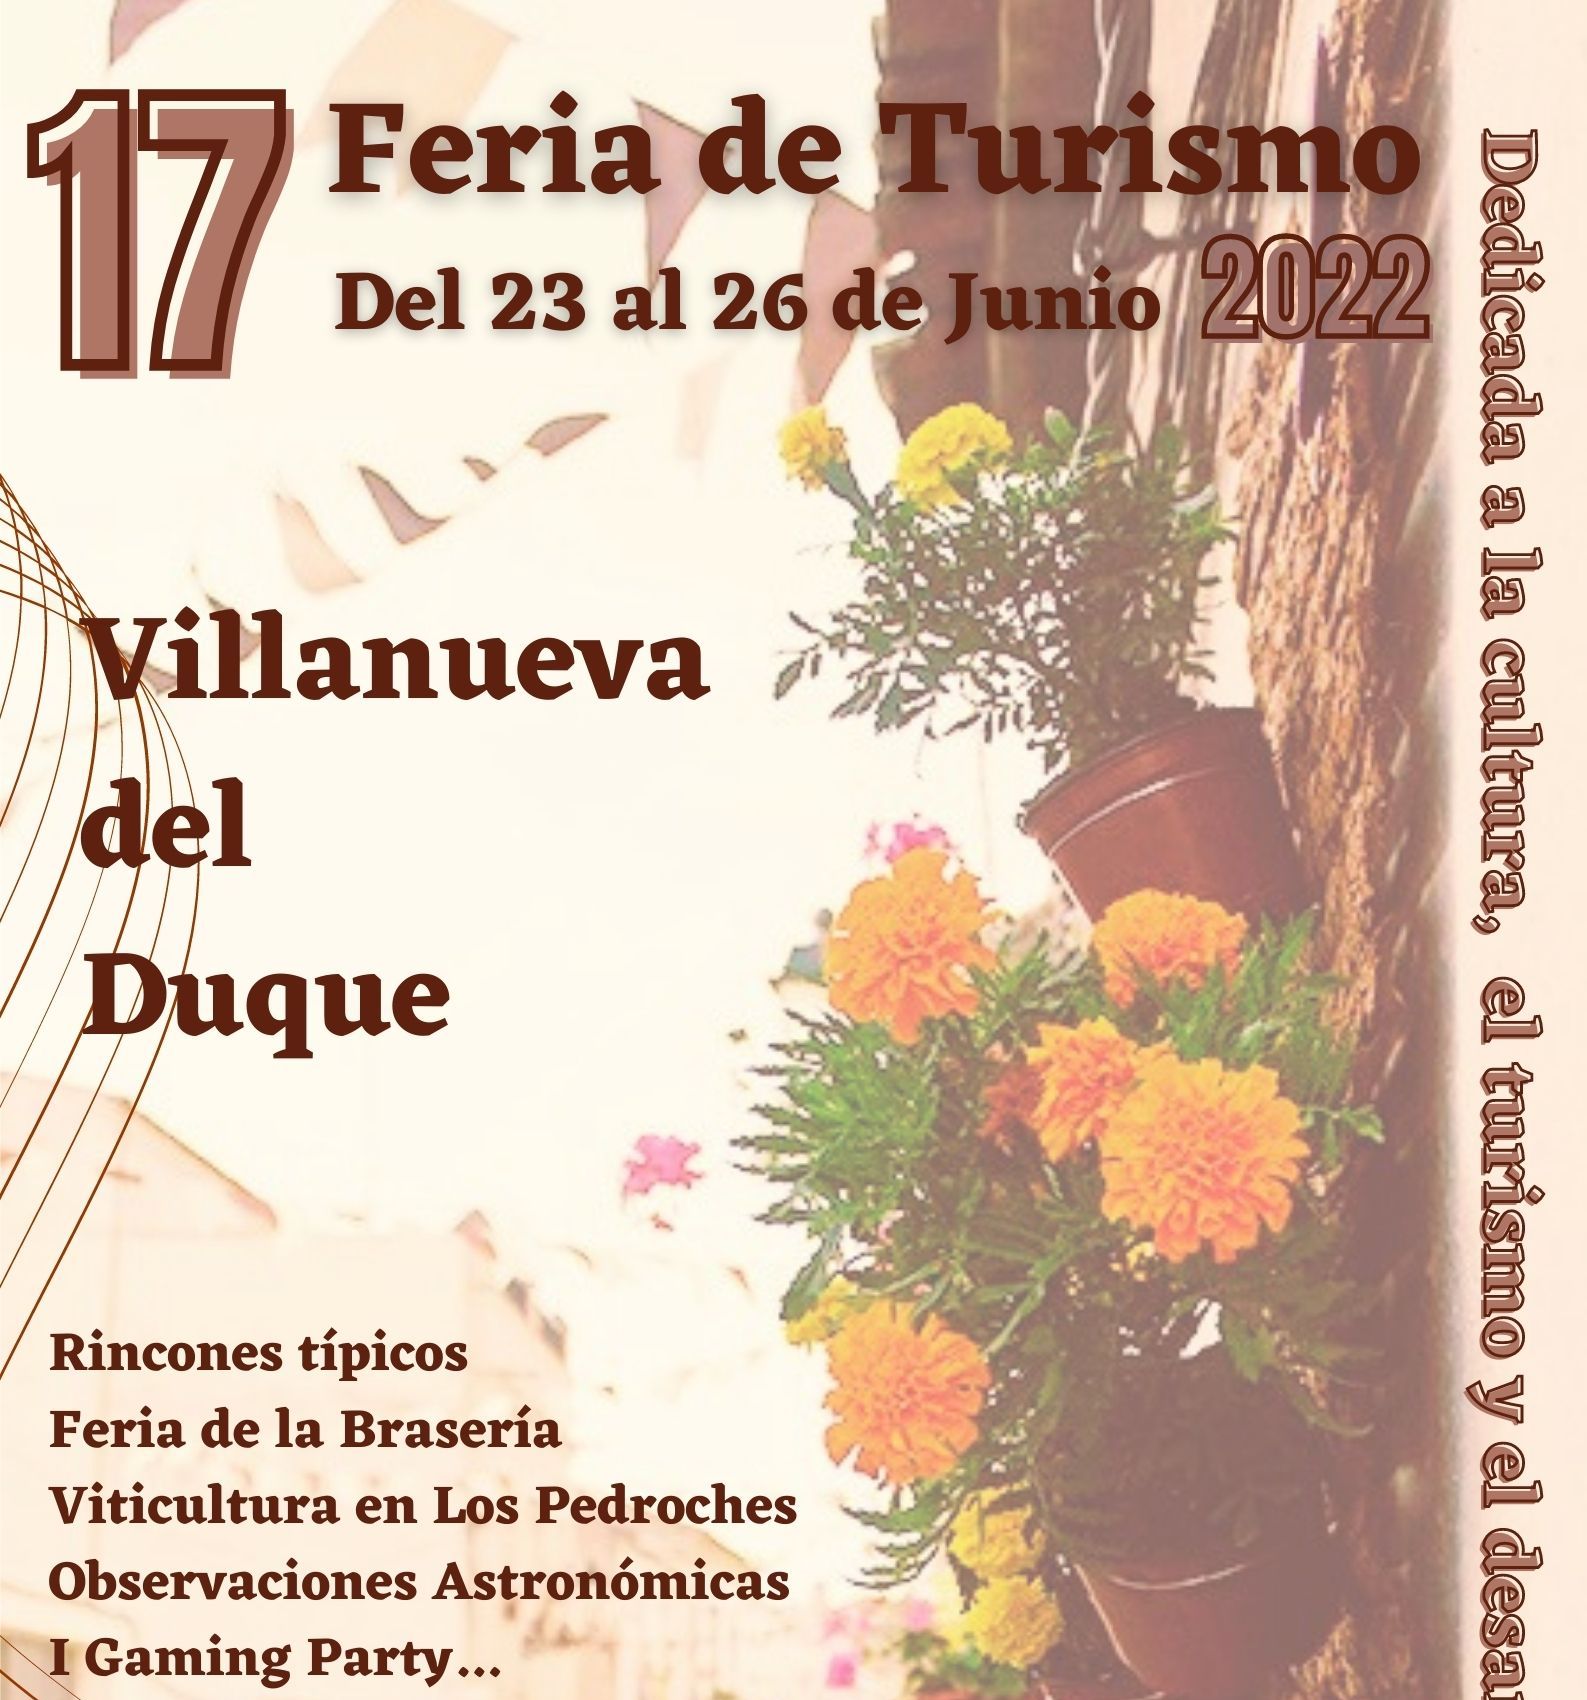 17 Feria de Turismo de Villanueva del Duque